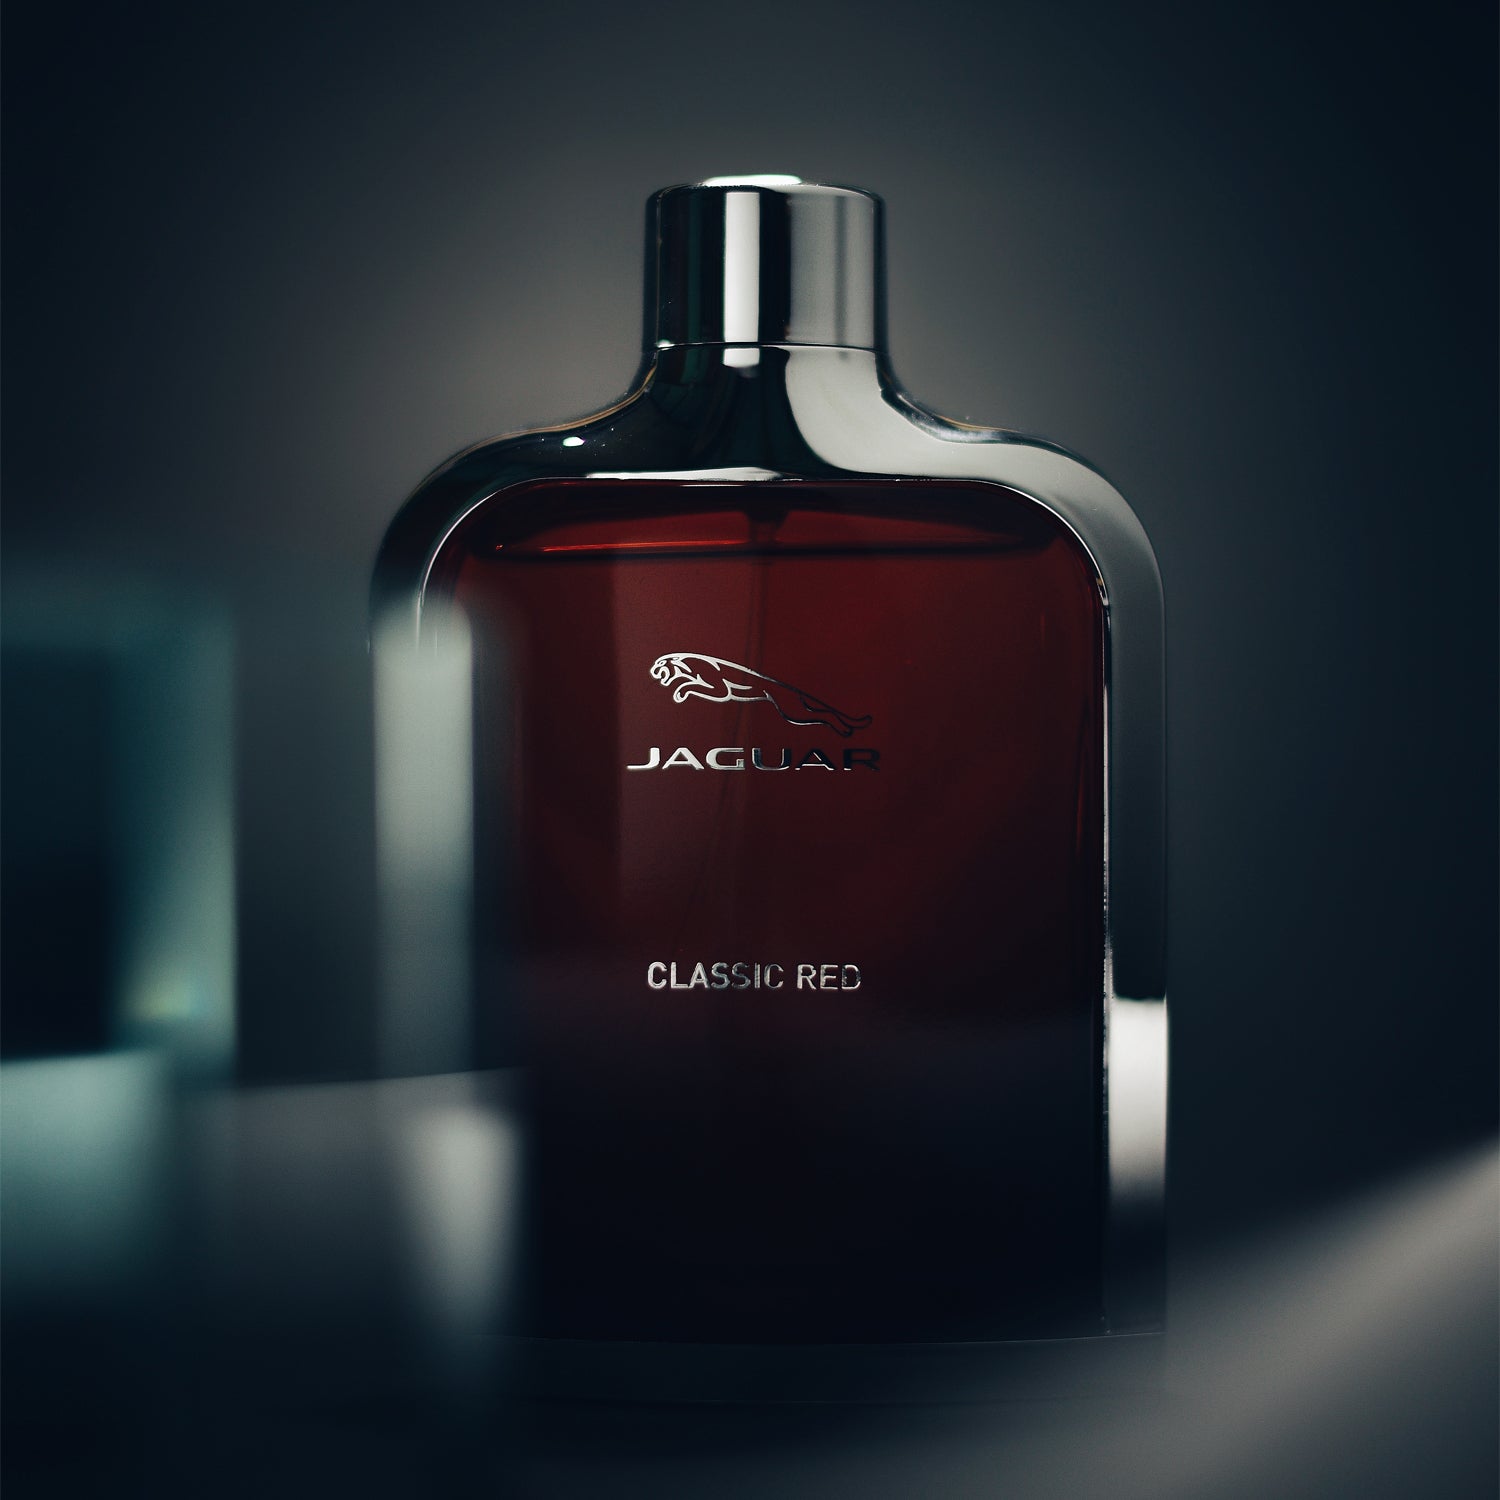 mens-jaguar-classic-black-edt-spray-3-4-oz-perfume-3562700373145